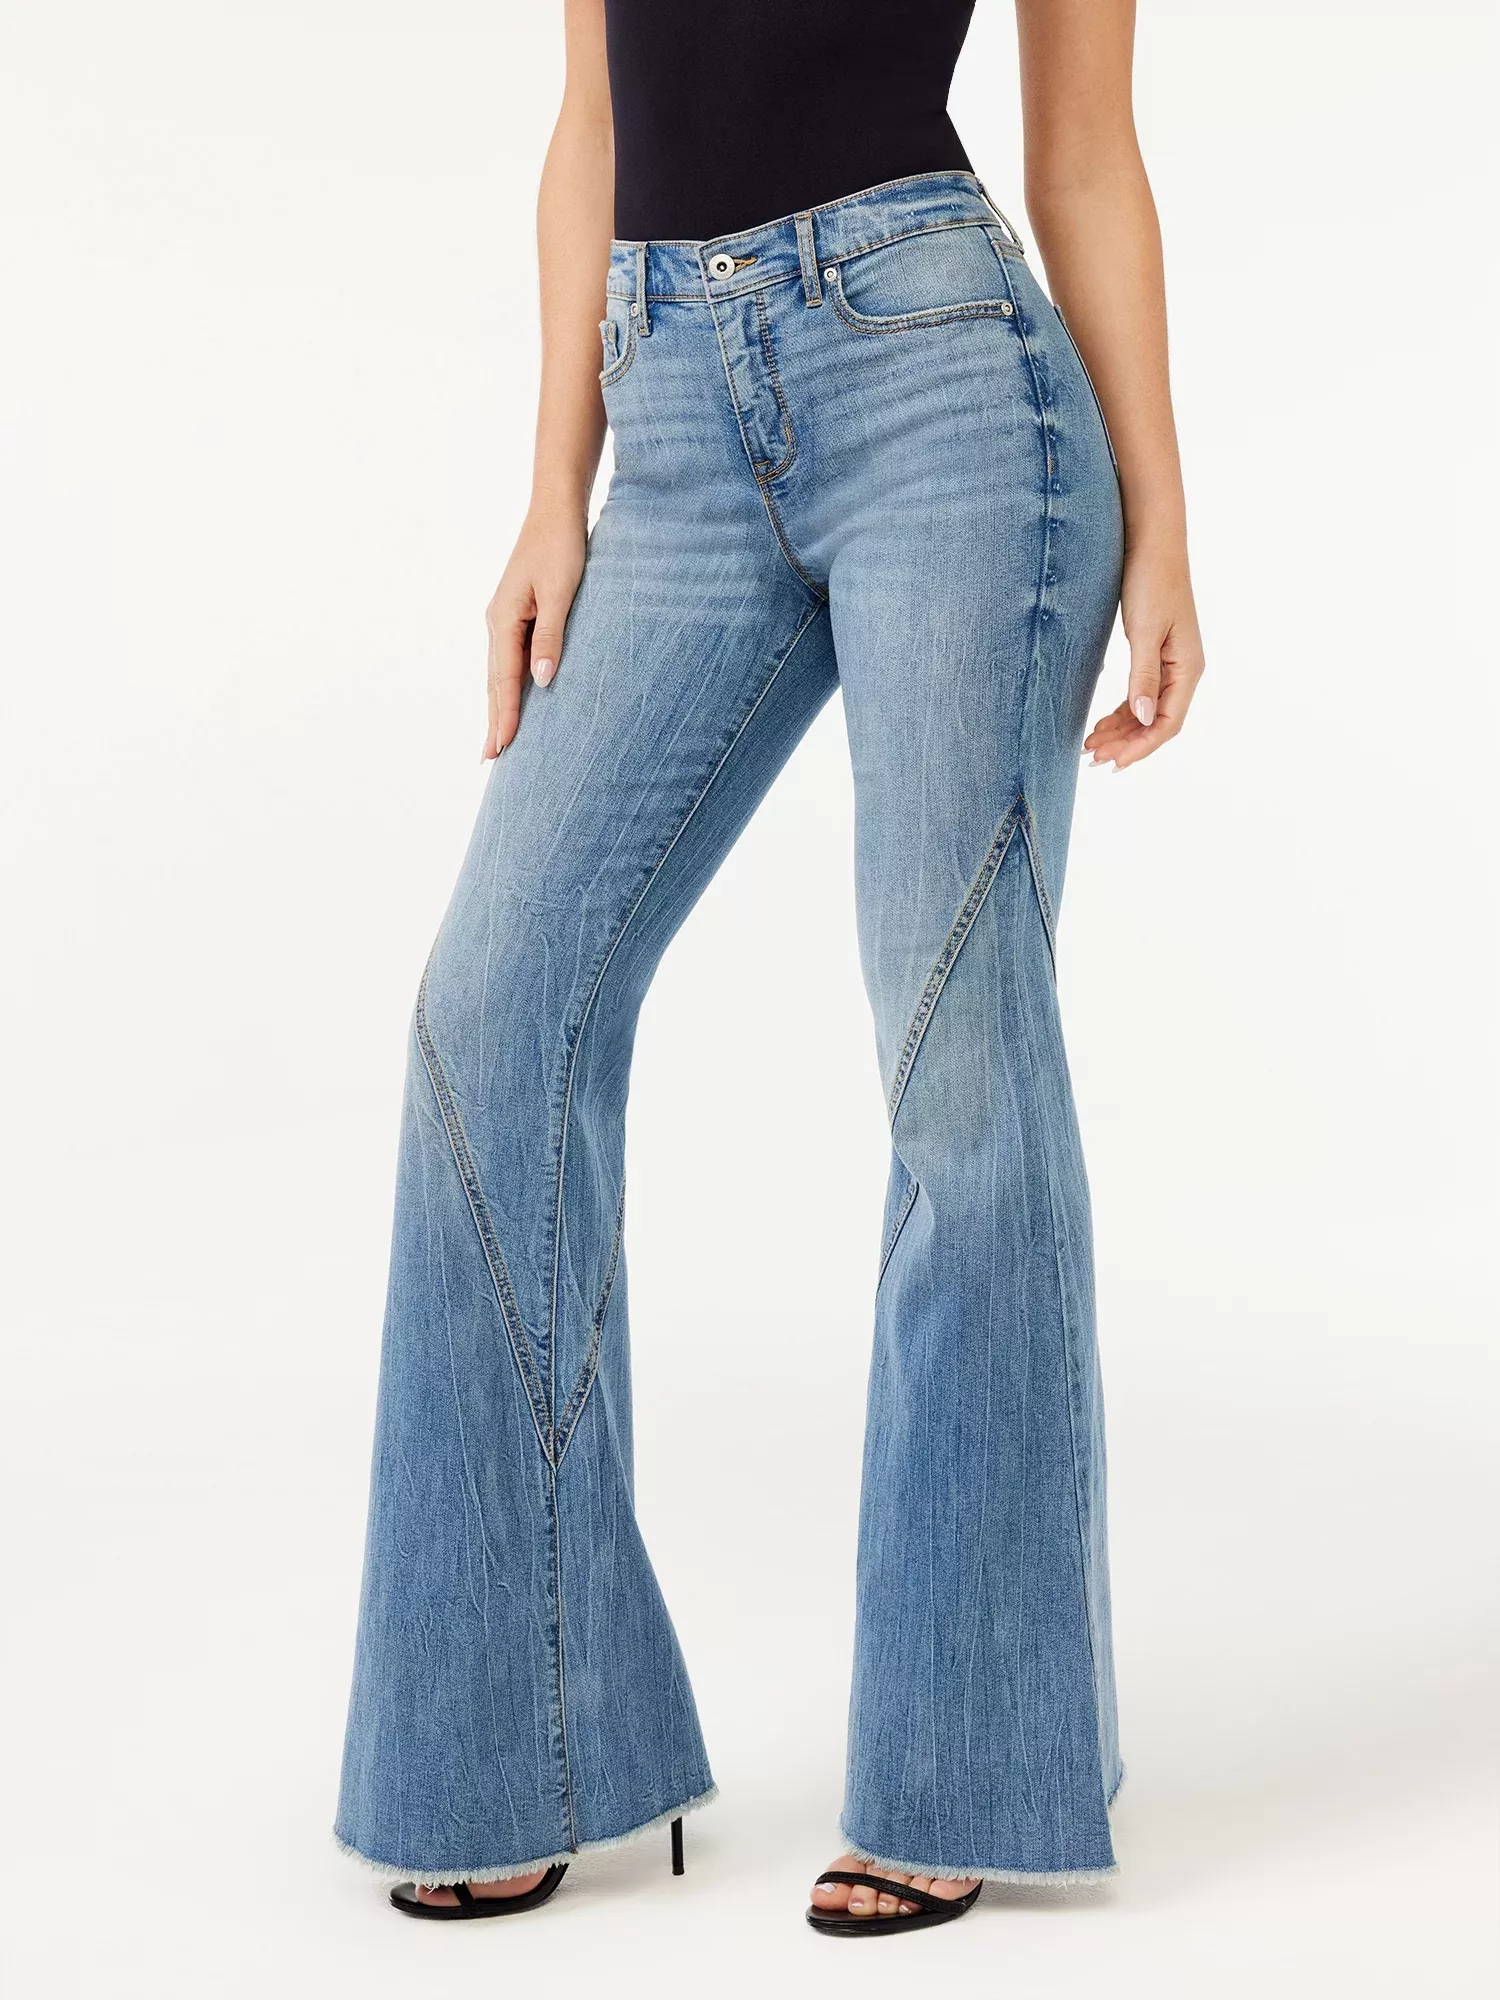 Sofia Jeans by Sofia Vergara Melisa High Rise Flare COATED Brown